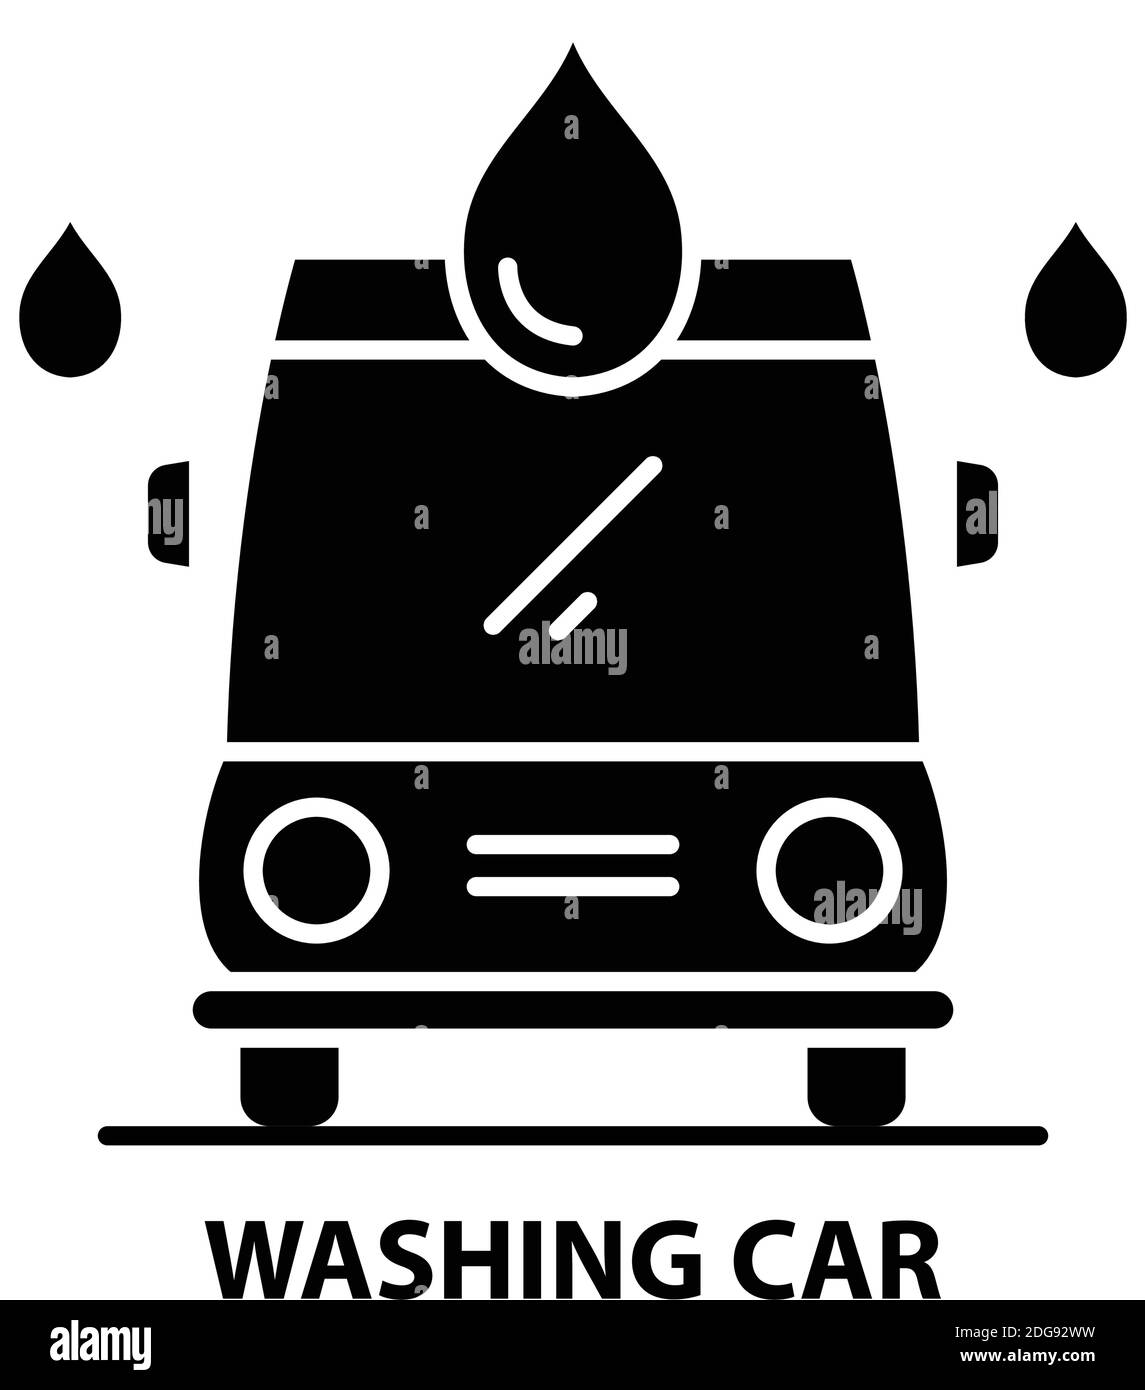 washing car icon, black vector sign with editable strokes, concept illustration Stock Vector